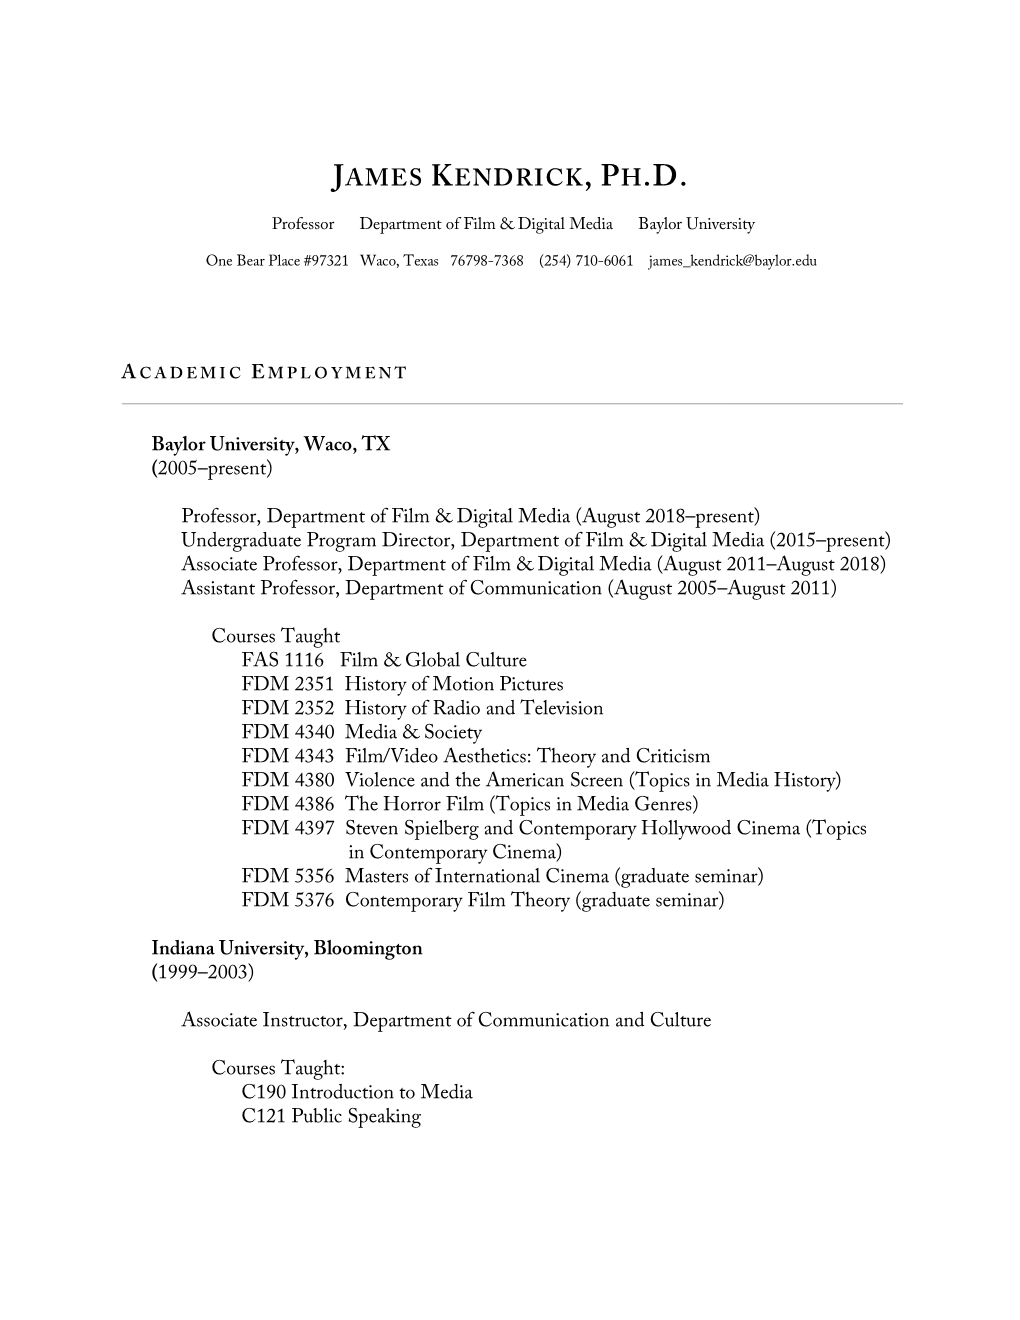 James Kendrick, Ph.D